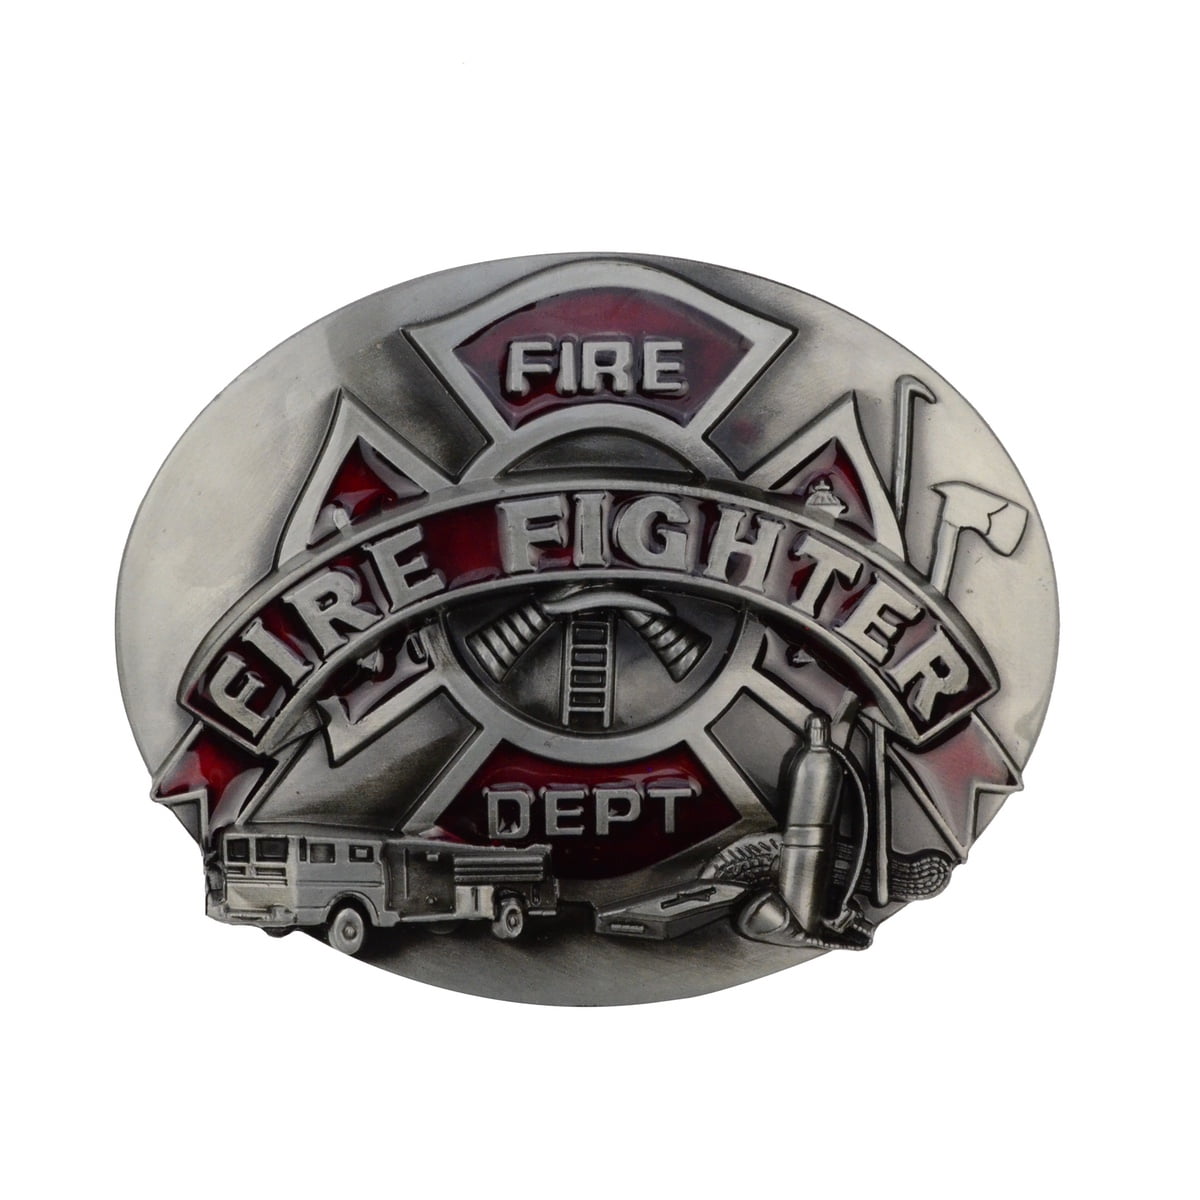 Vintage Fire Fighter Belt Buckle Fire Department FDT-03 